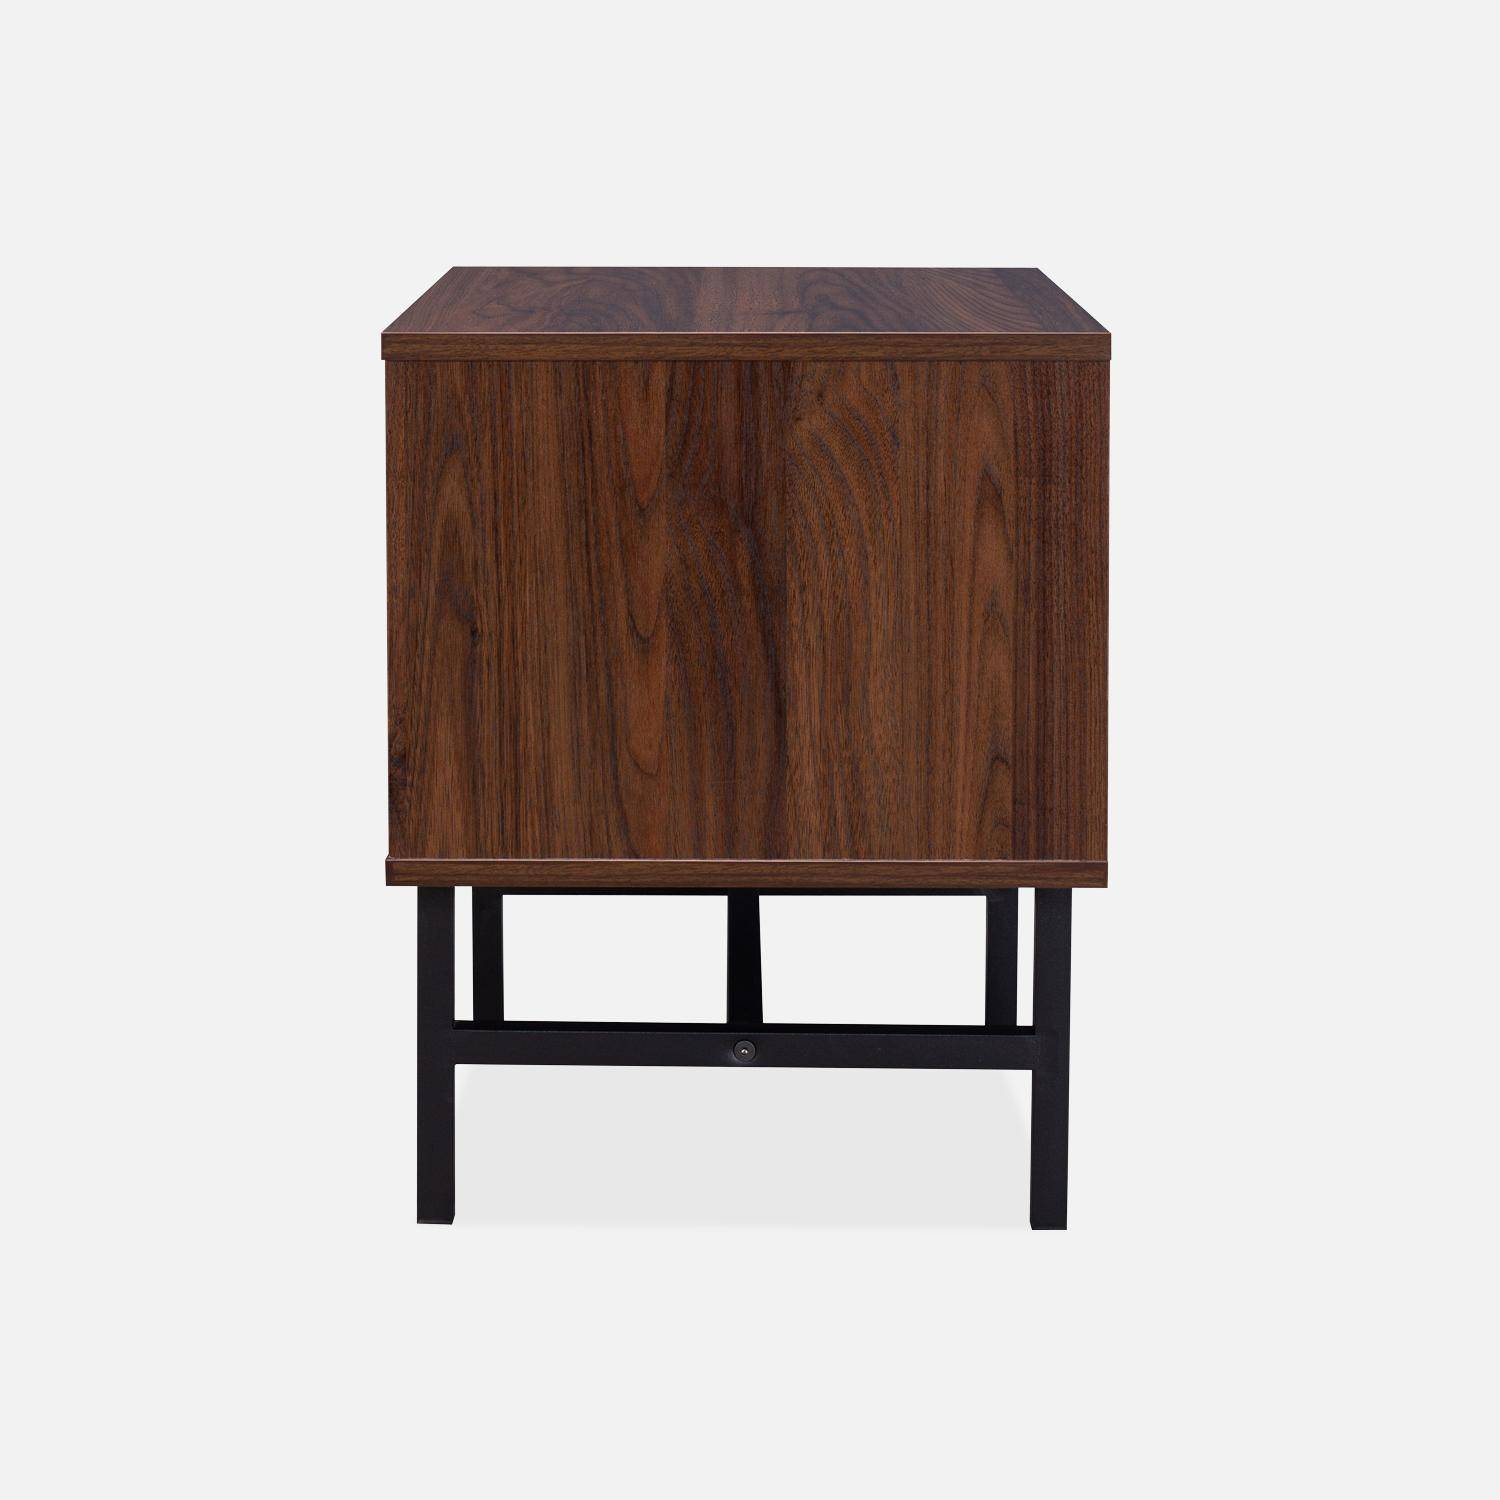 Set of 2 dark wood effect bedside tables, one drawer, L 48 x W 39 x H 50cm,sweeek,Photo6